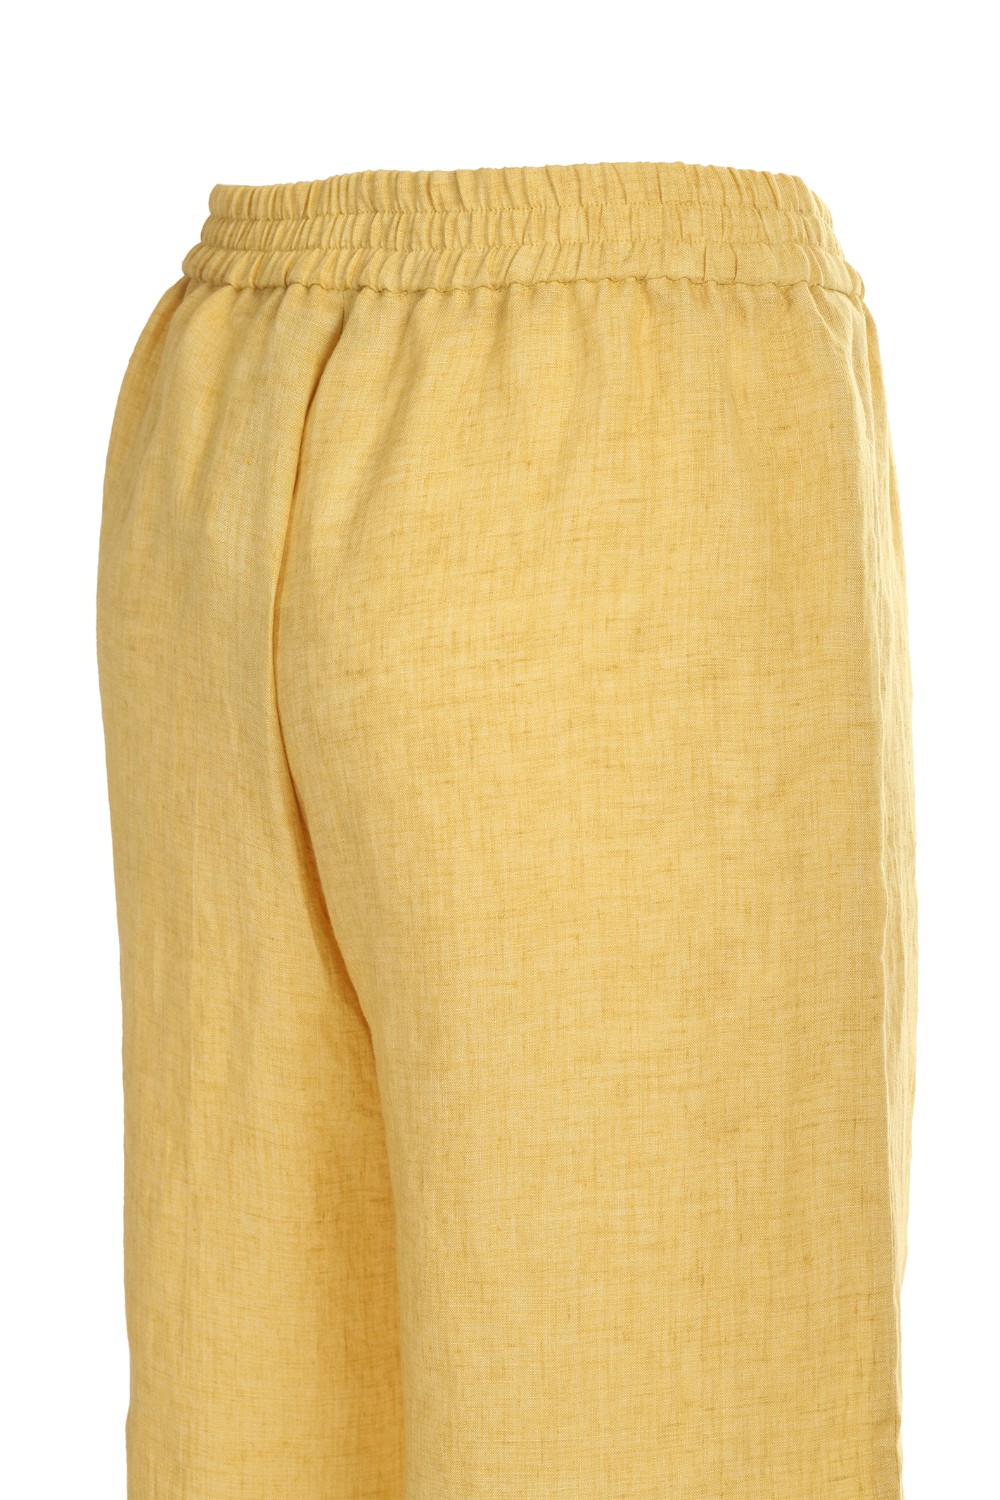 shop FABIANA FILIPPI Saldi Pantalone: Fabiana Filippi pantalone giallo.
Vestibilità regular.
Coulisse in vita.
100 % lino.
Made in Italy. PAD270W793 A934-756 number 4159078